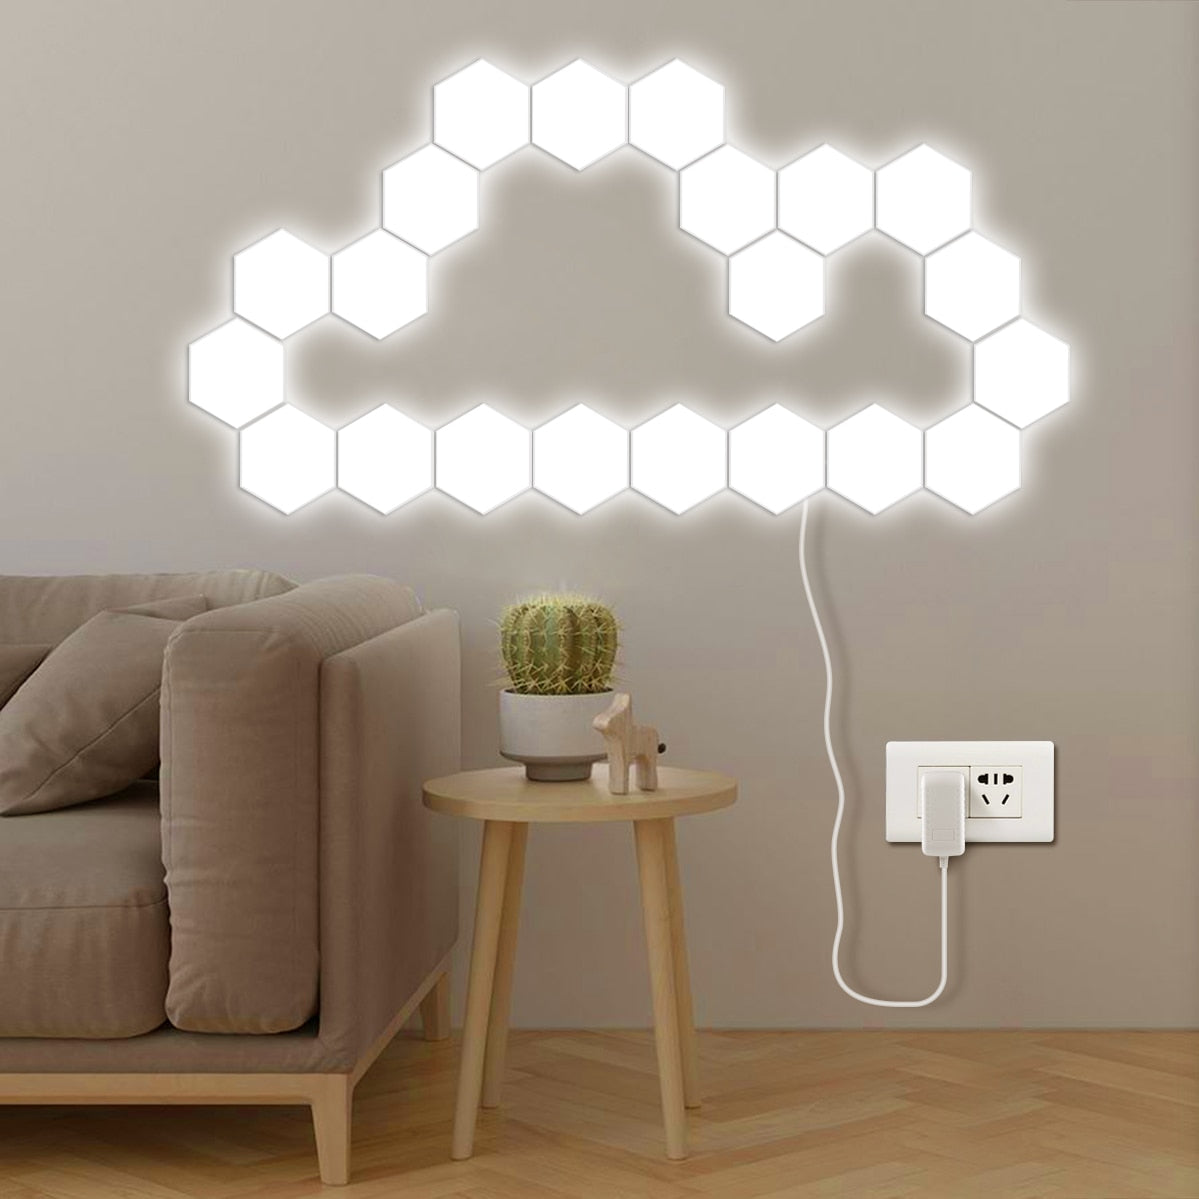 Quantum lamp LED Panel Light Magnetic Hexagons Modular Touch Sensitive sensor Lights DIY Wall Creative Decoration painel led